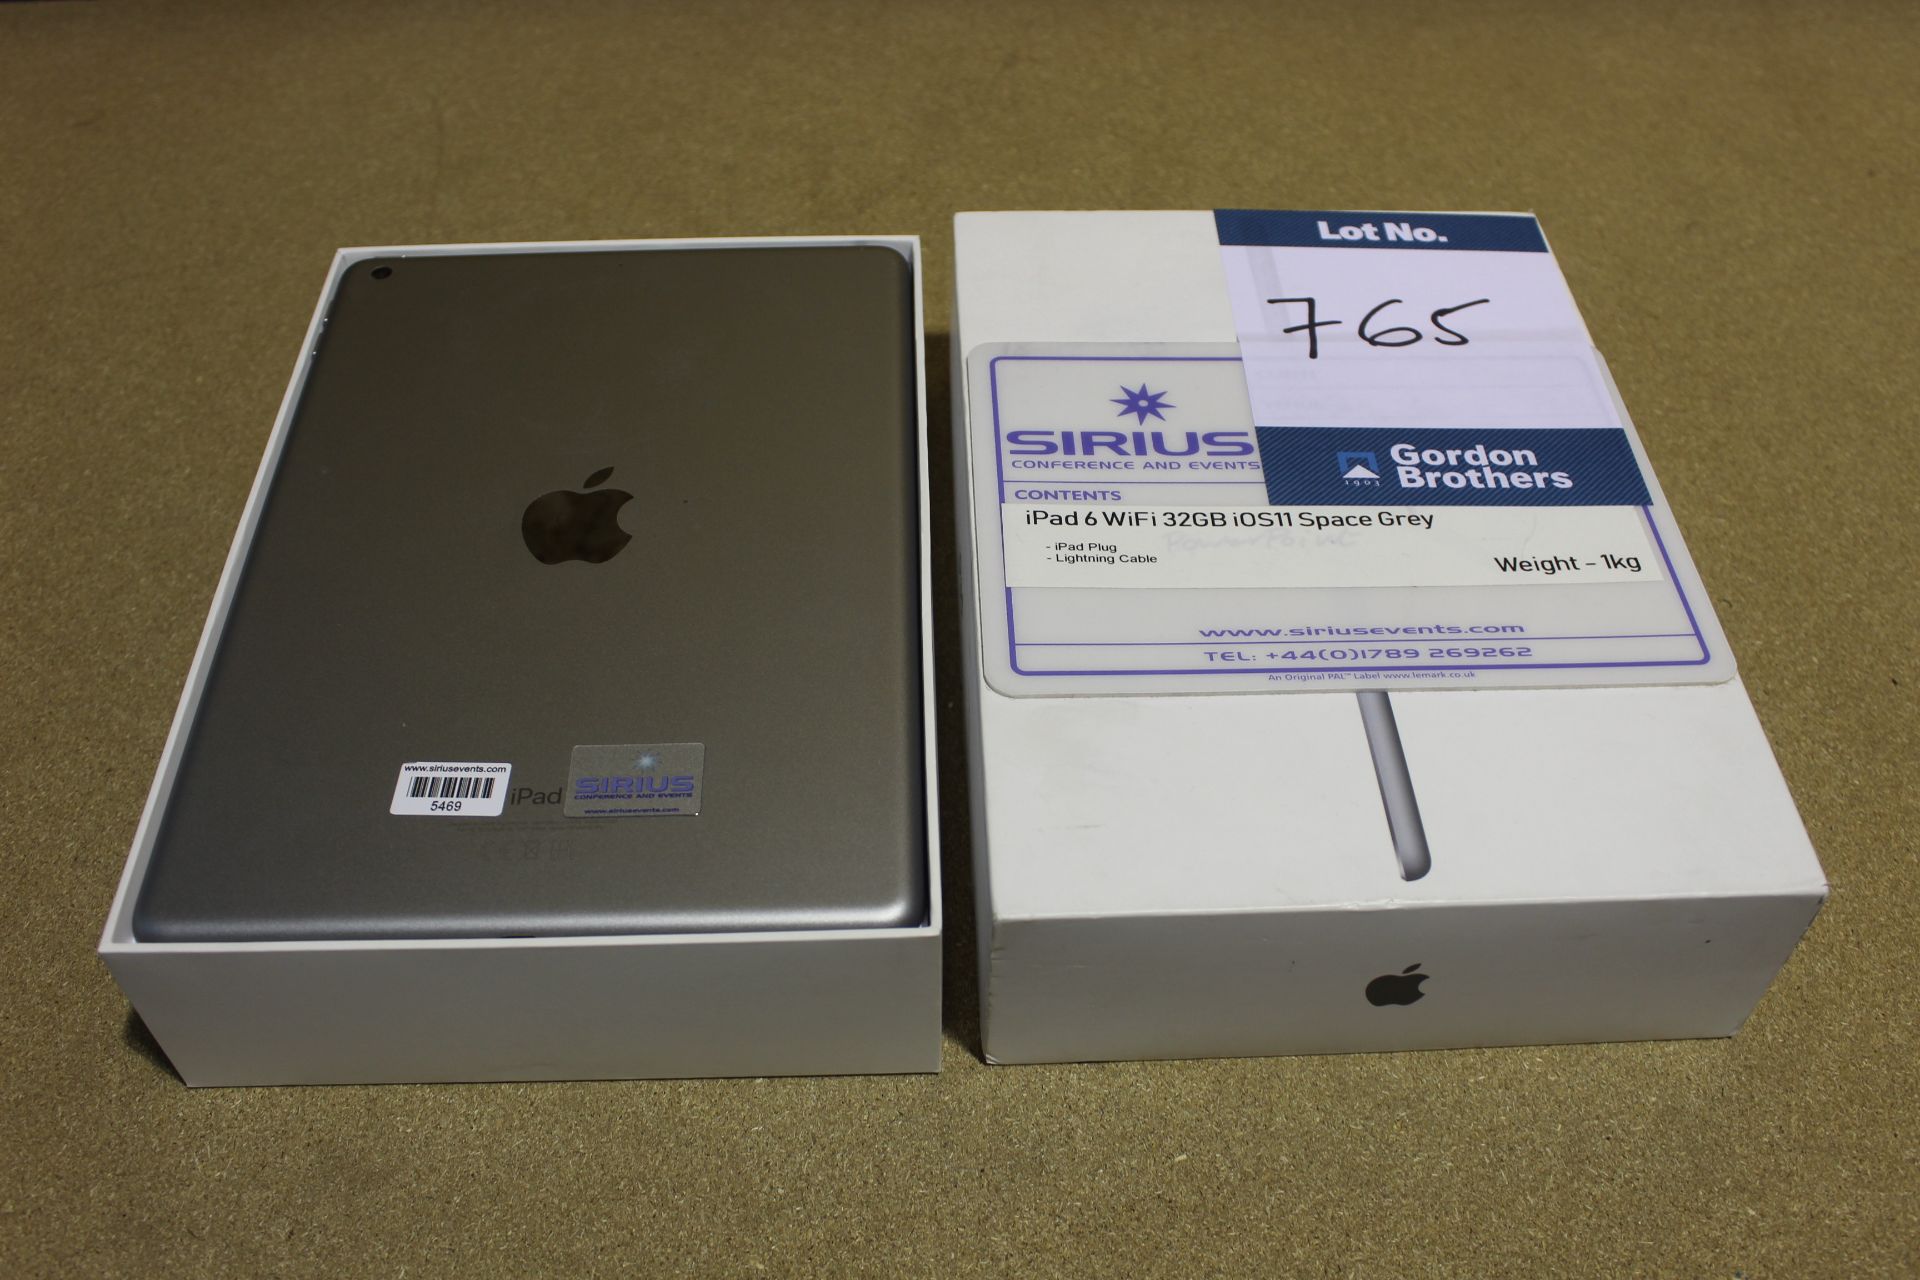 Apple iPad A1893 9.7" 32GB Wi-Fi (6th Gen) Space Grey tablet, Serial No. F9FWMF00JF8J with iPad - Image 2 of 3